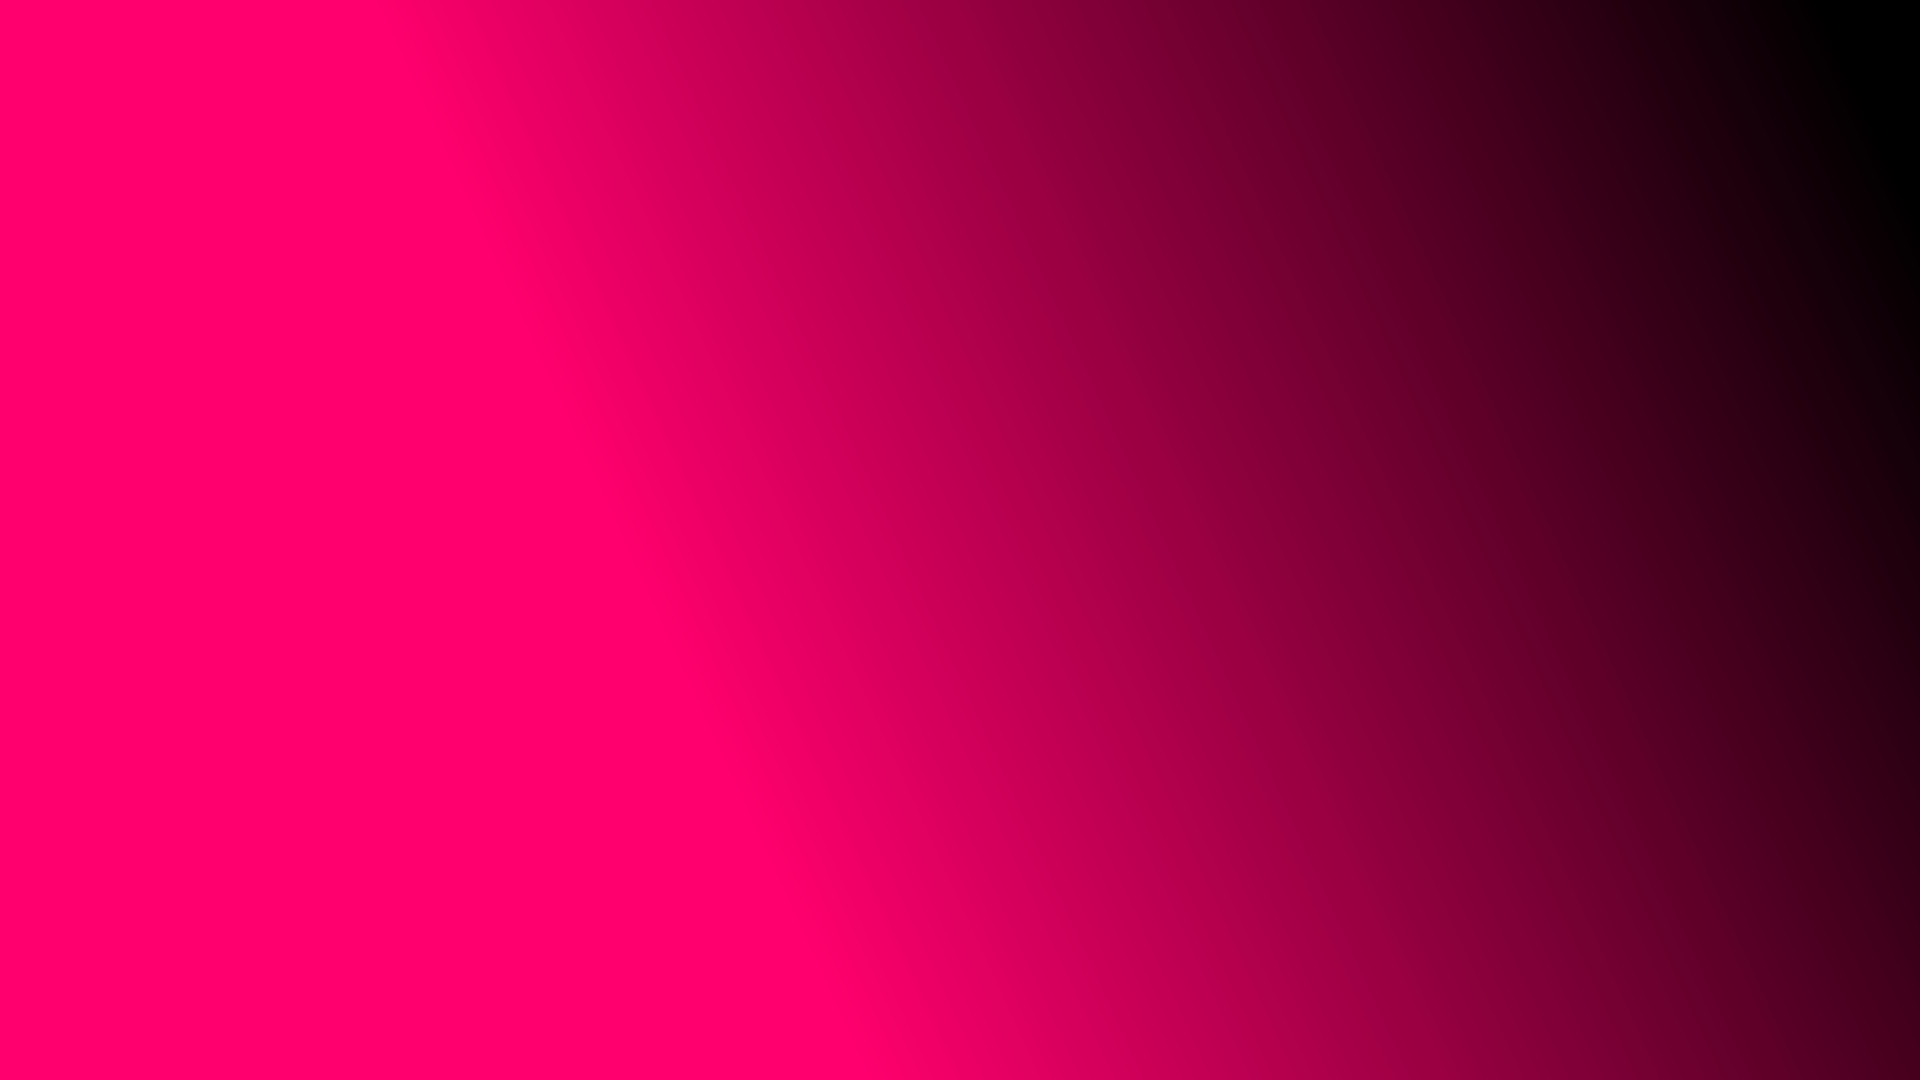 Pink And Black Backgrounds HD | PixelsTalk.Net